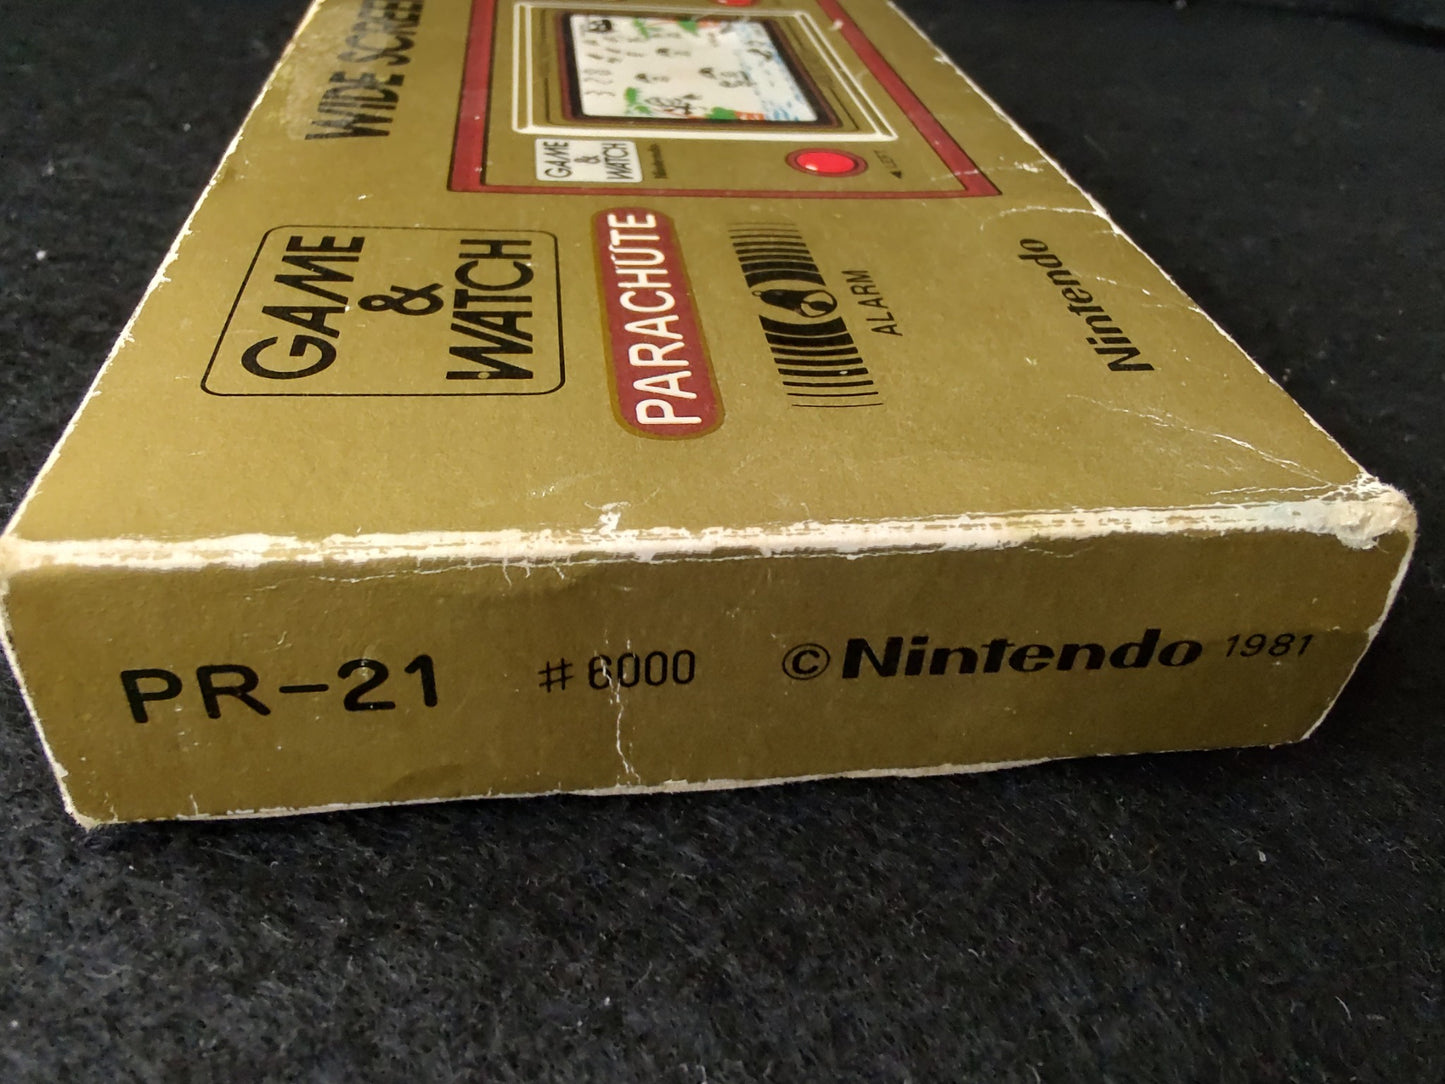 Vintage Nintendo Game & Watch Parachute wide Screen, Manual, Boxed set-g0215-